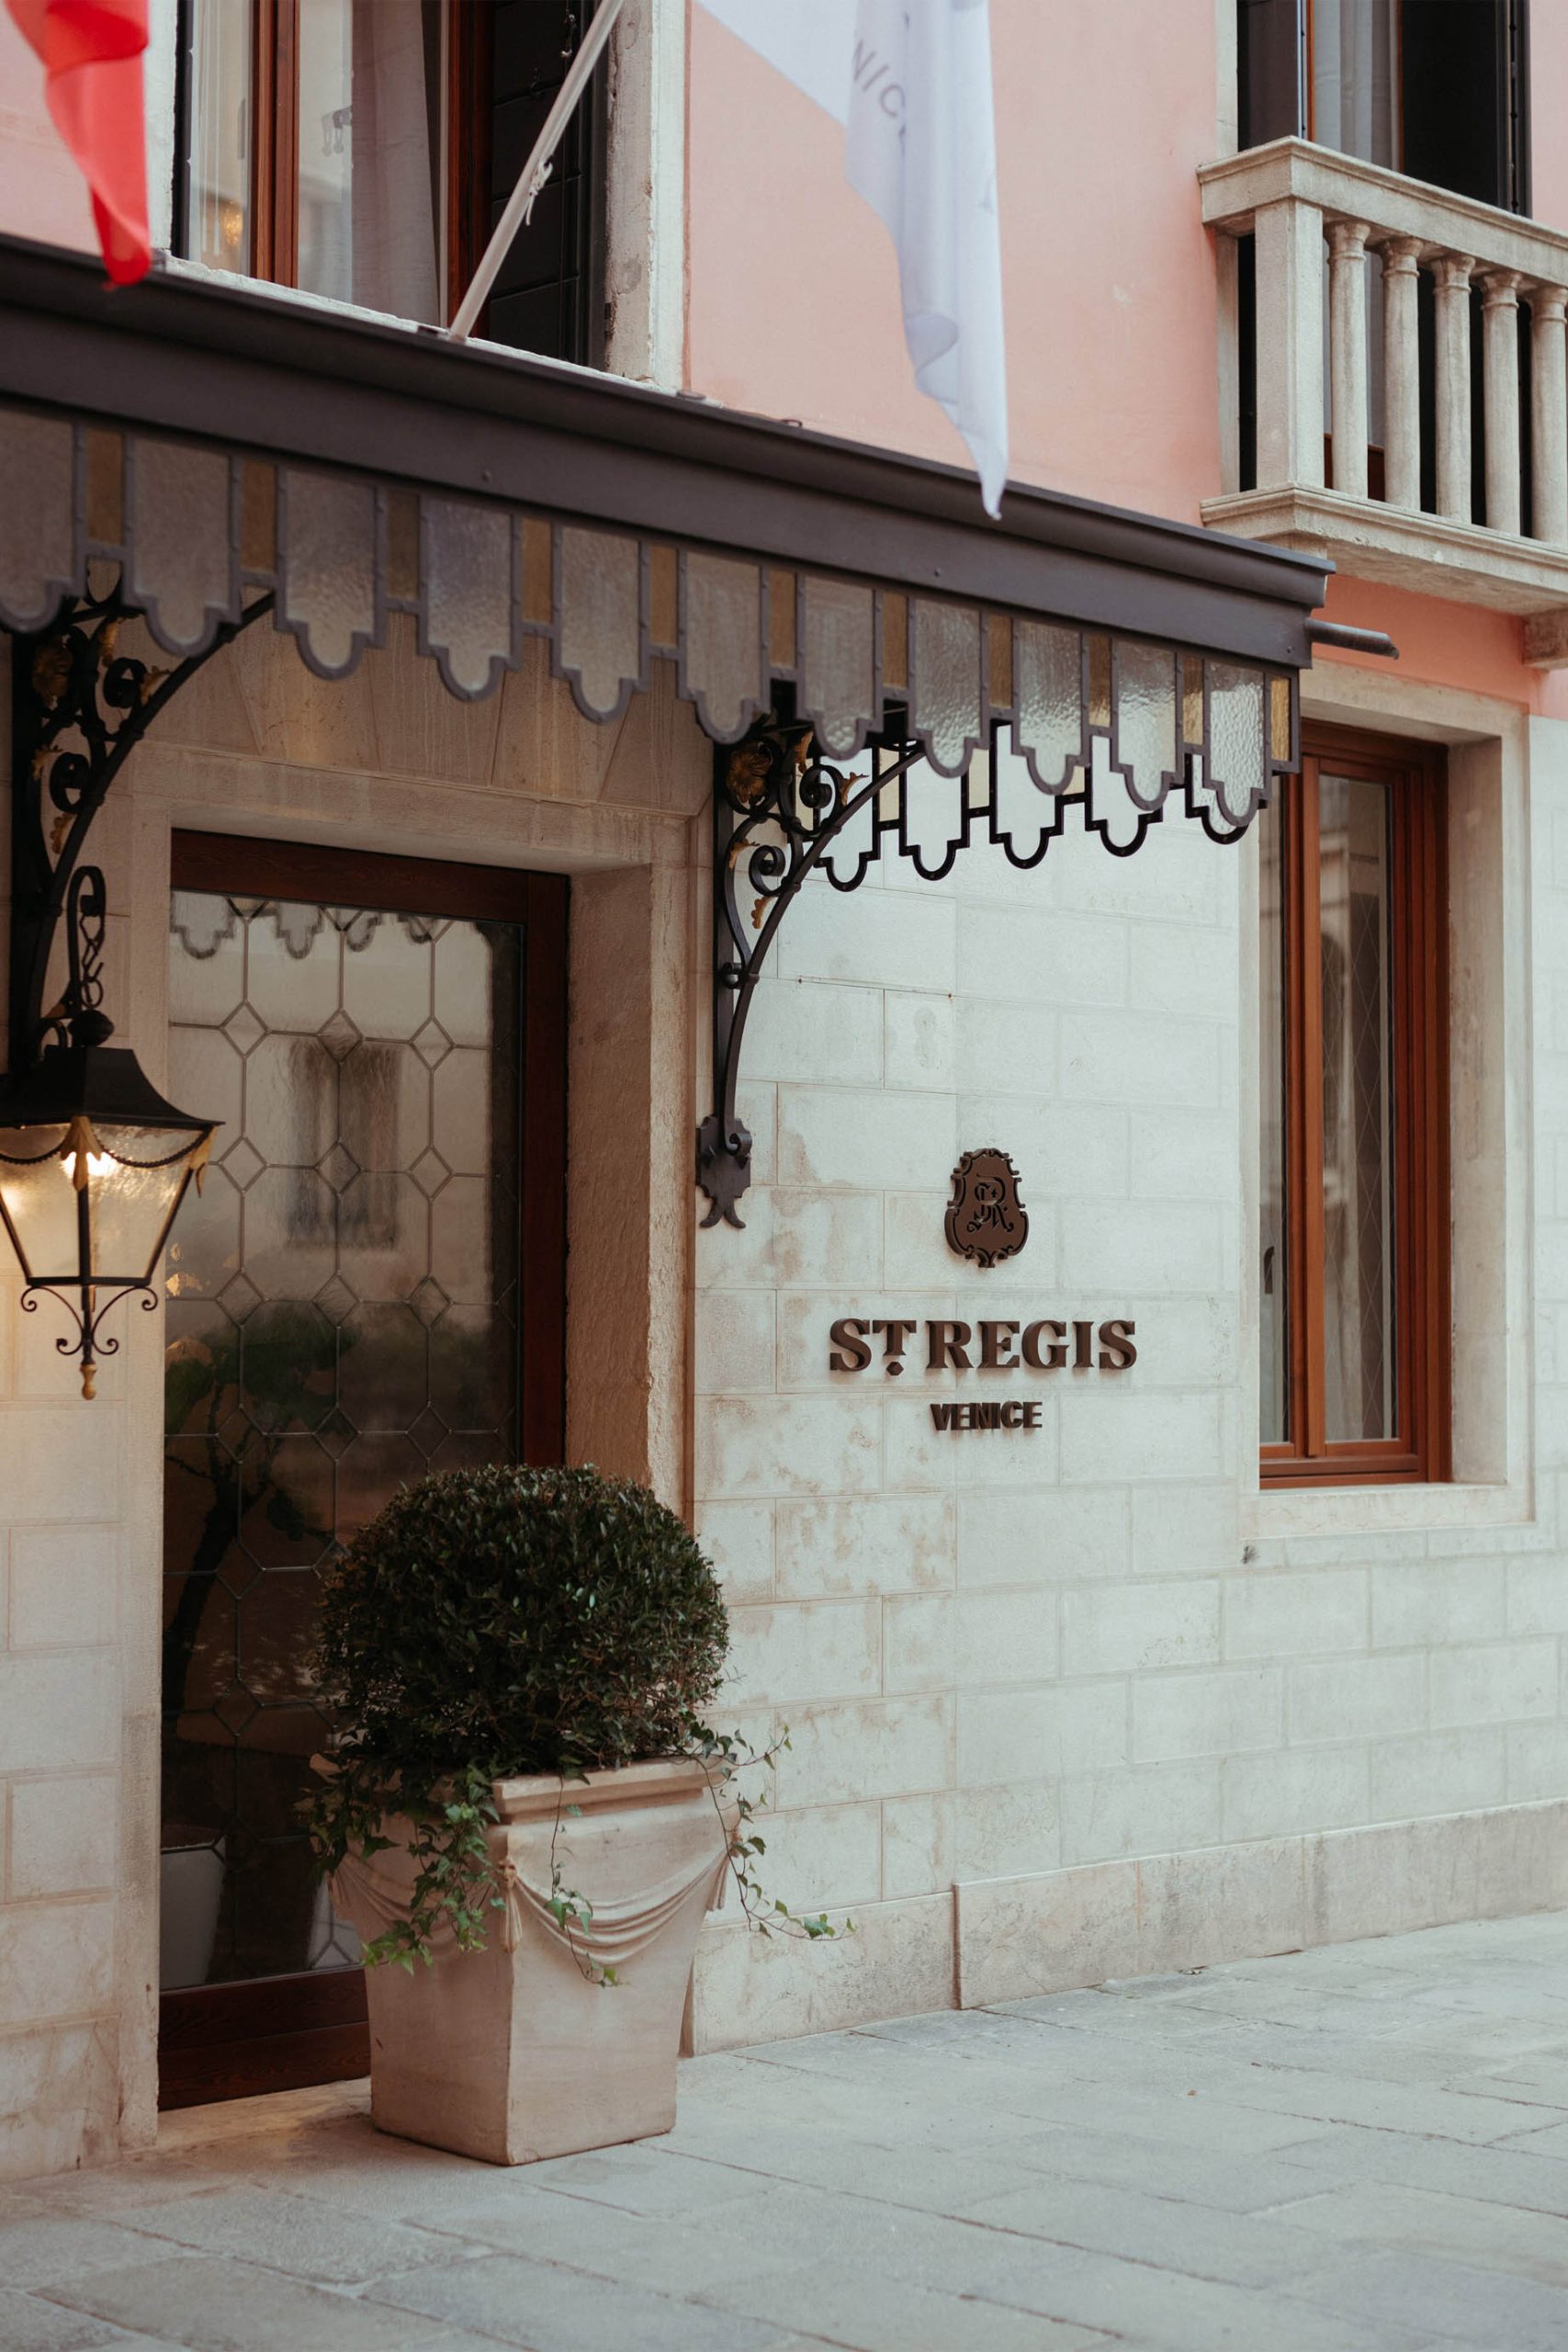 The St. Regis Venice Hotel – Venice, Italy – Entrance off Corte Barozzi